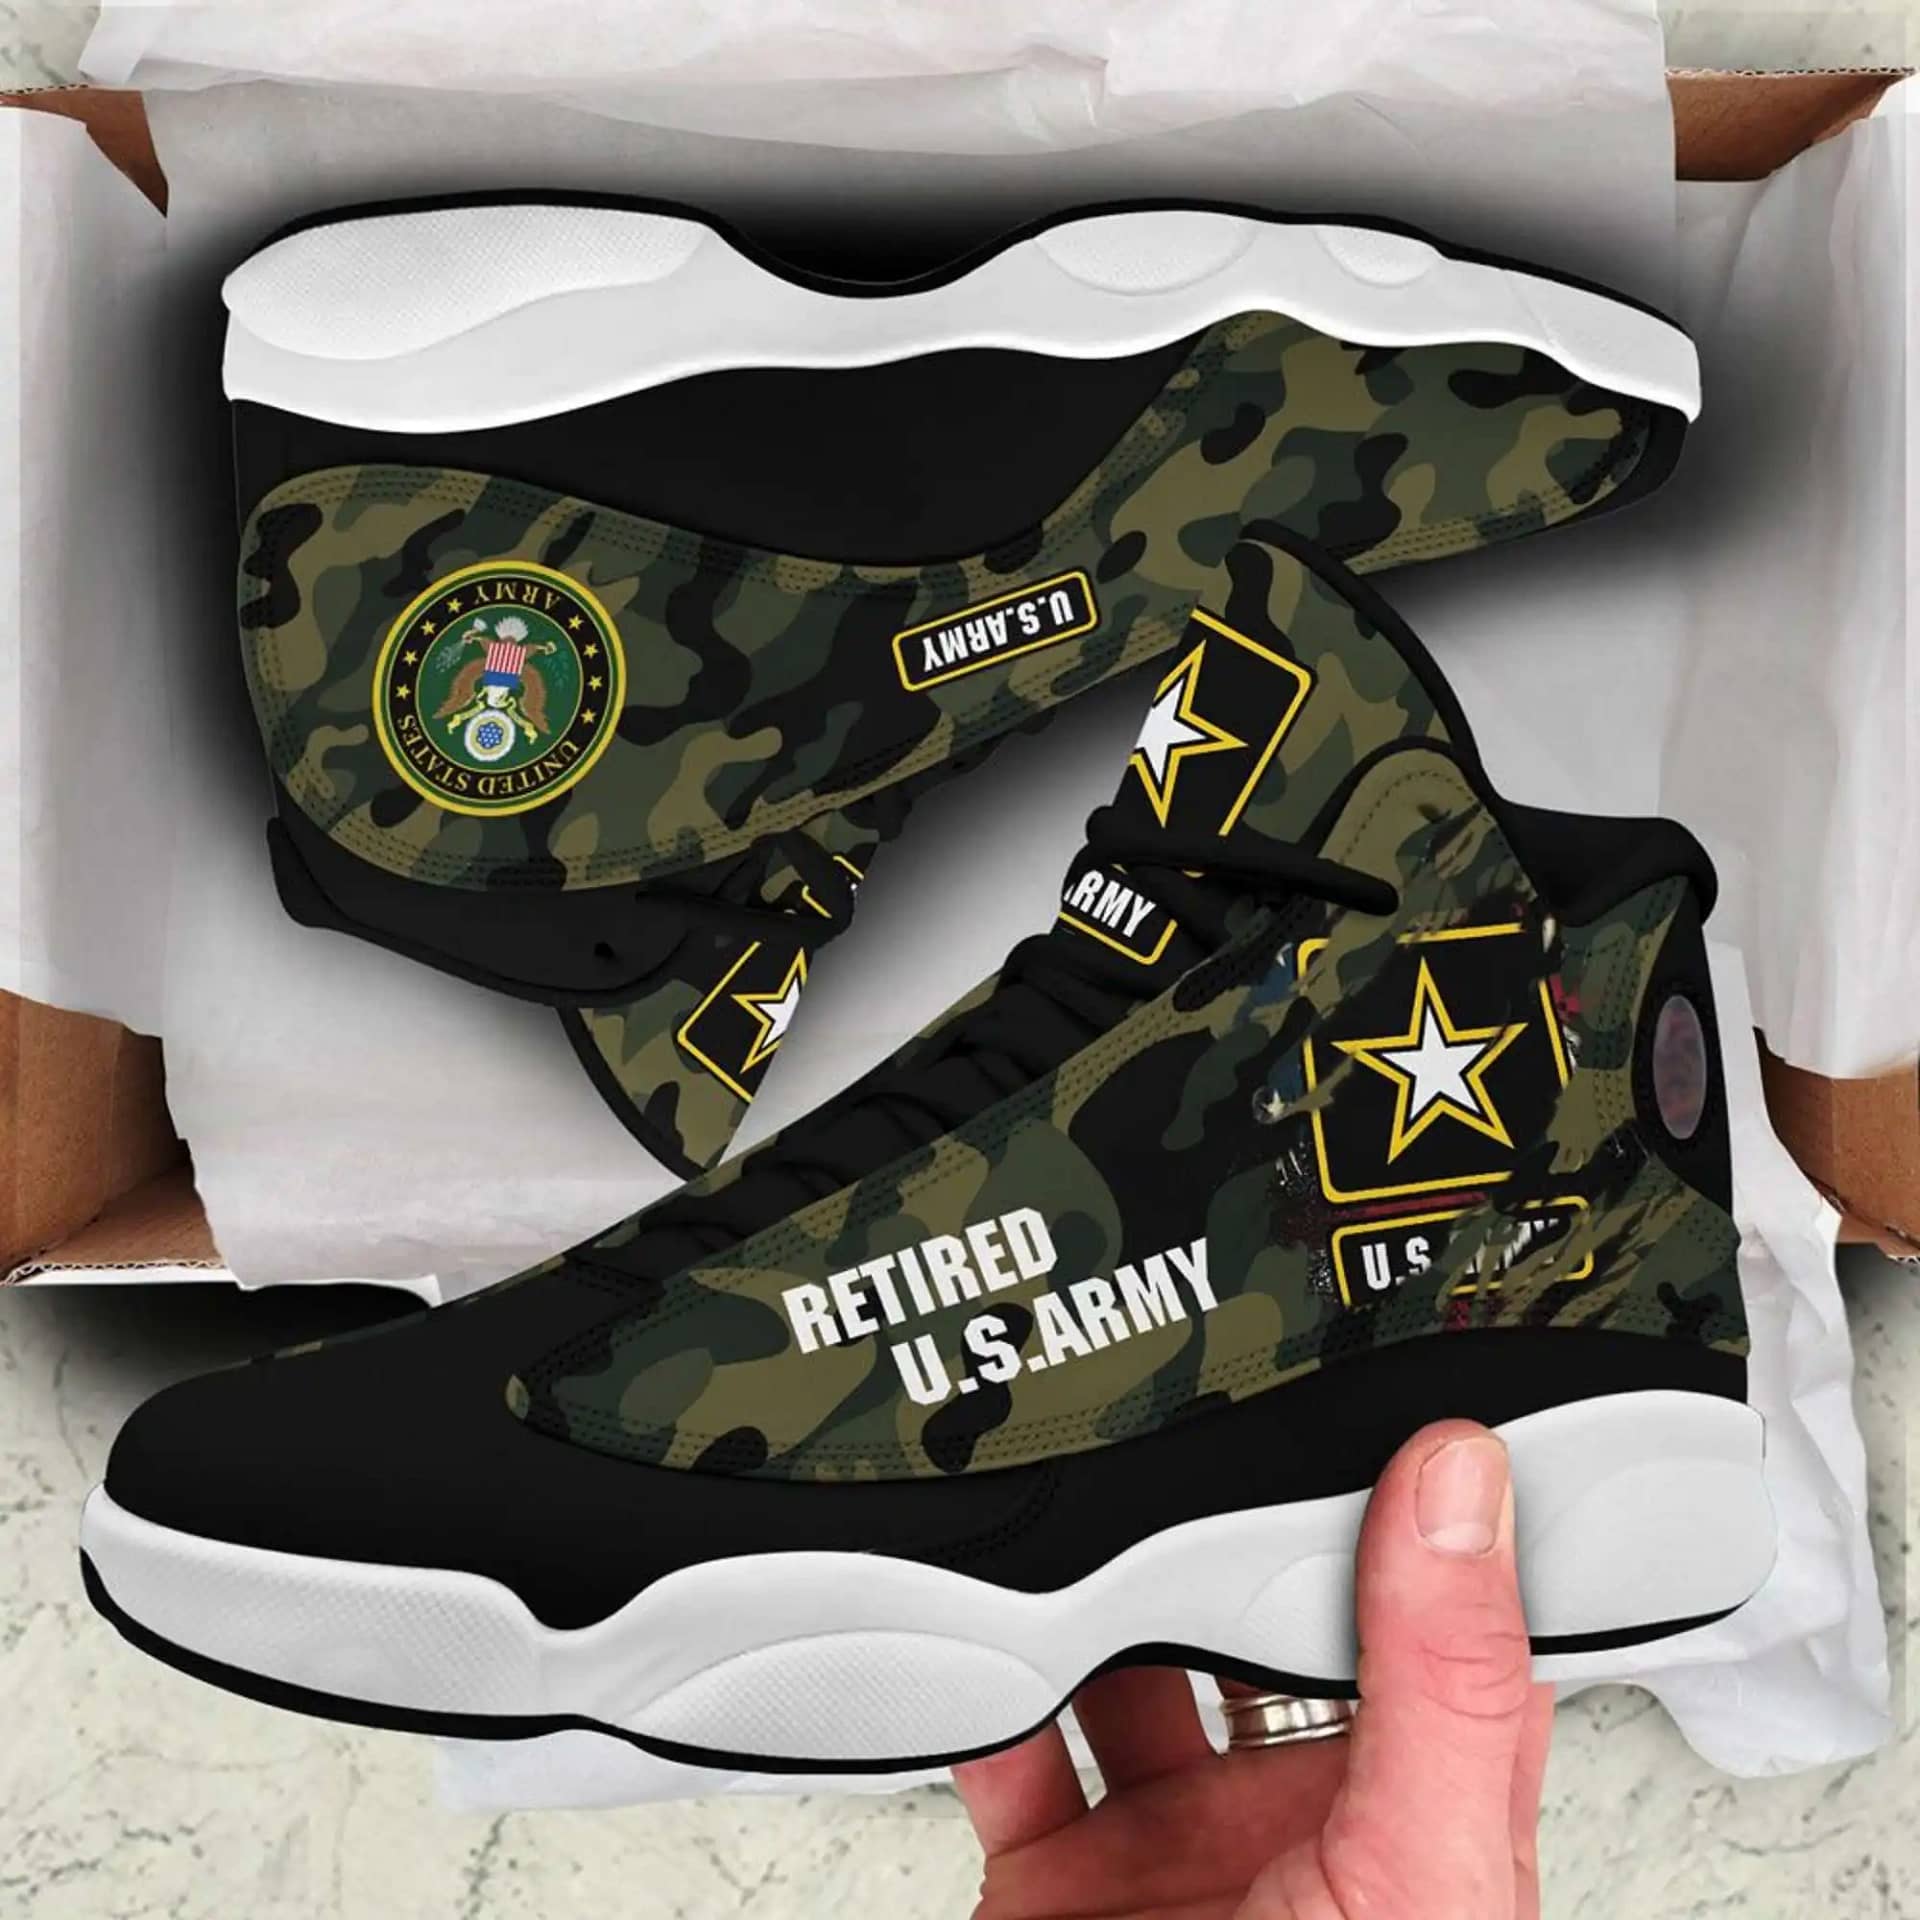 Us Army Air Jordan Shoes